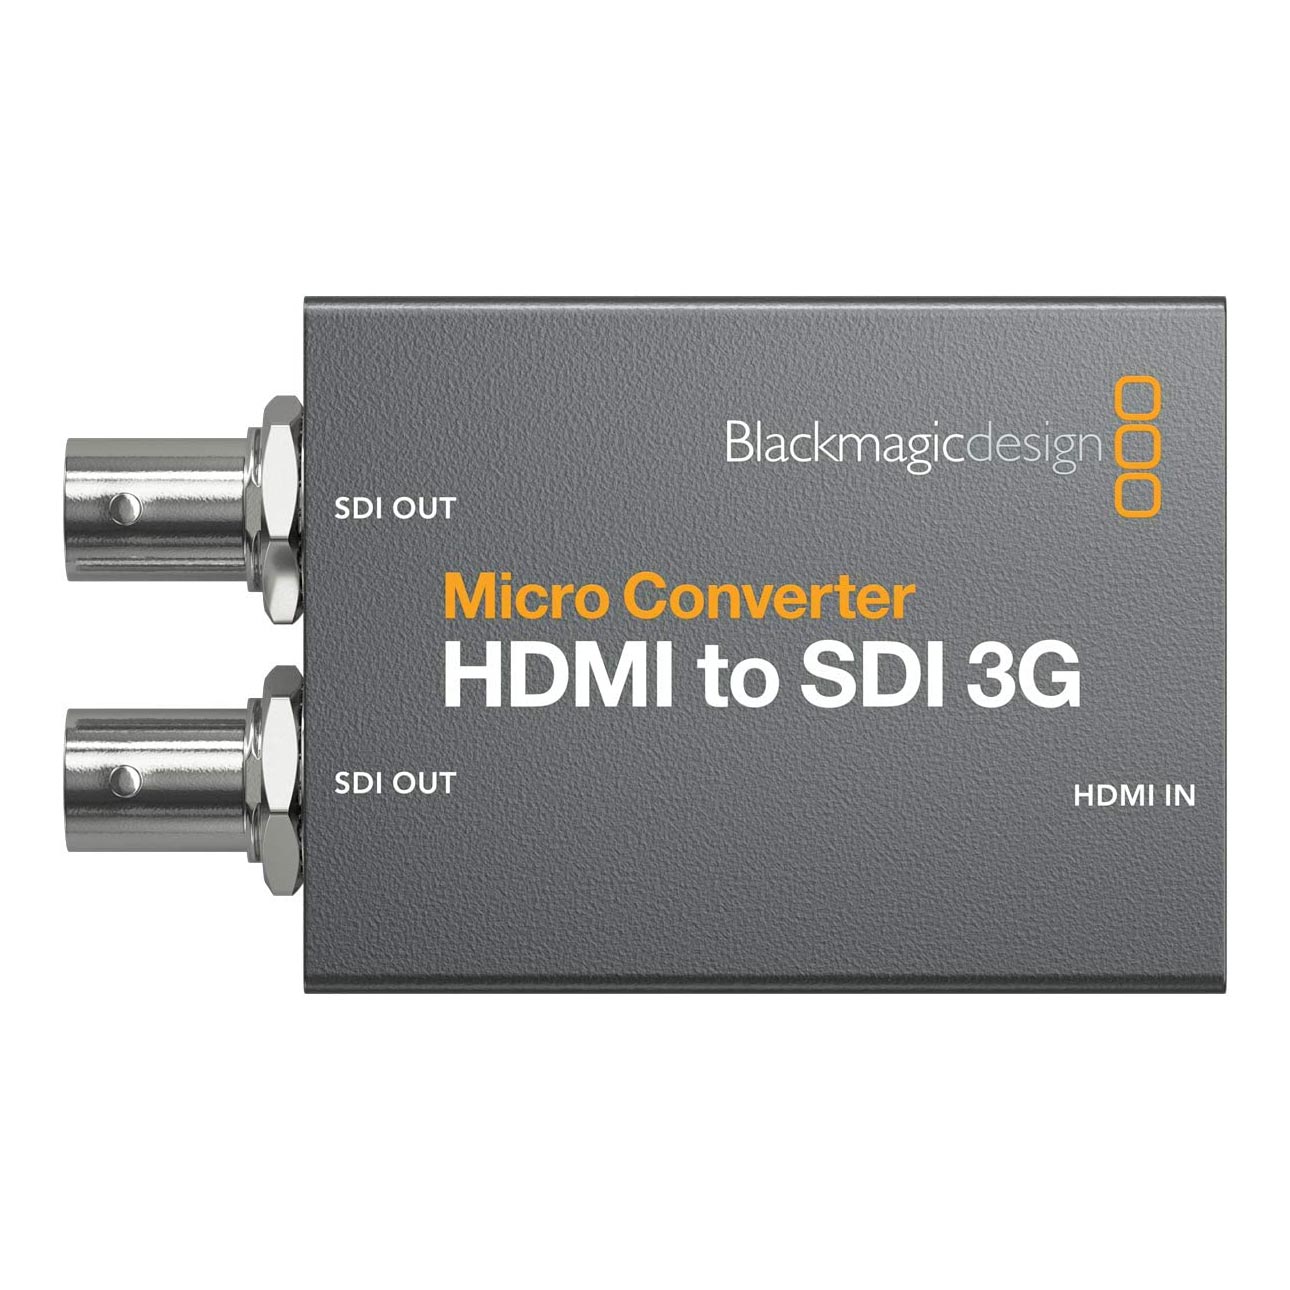 Конвертер Blackmagic Design Micro Converter HDMI to SDI 3G PSU конвертер ugreen cm101 40744 hdmi to vga hdmi converter черный